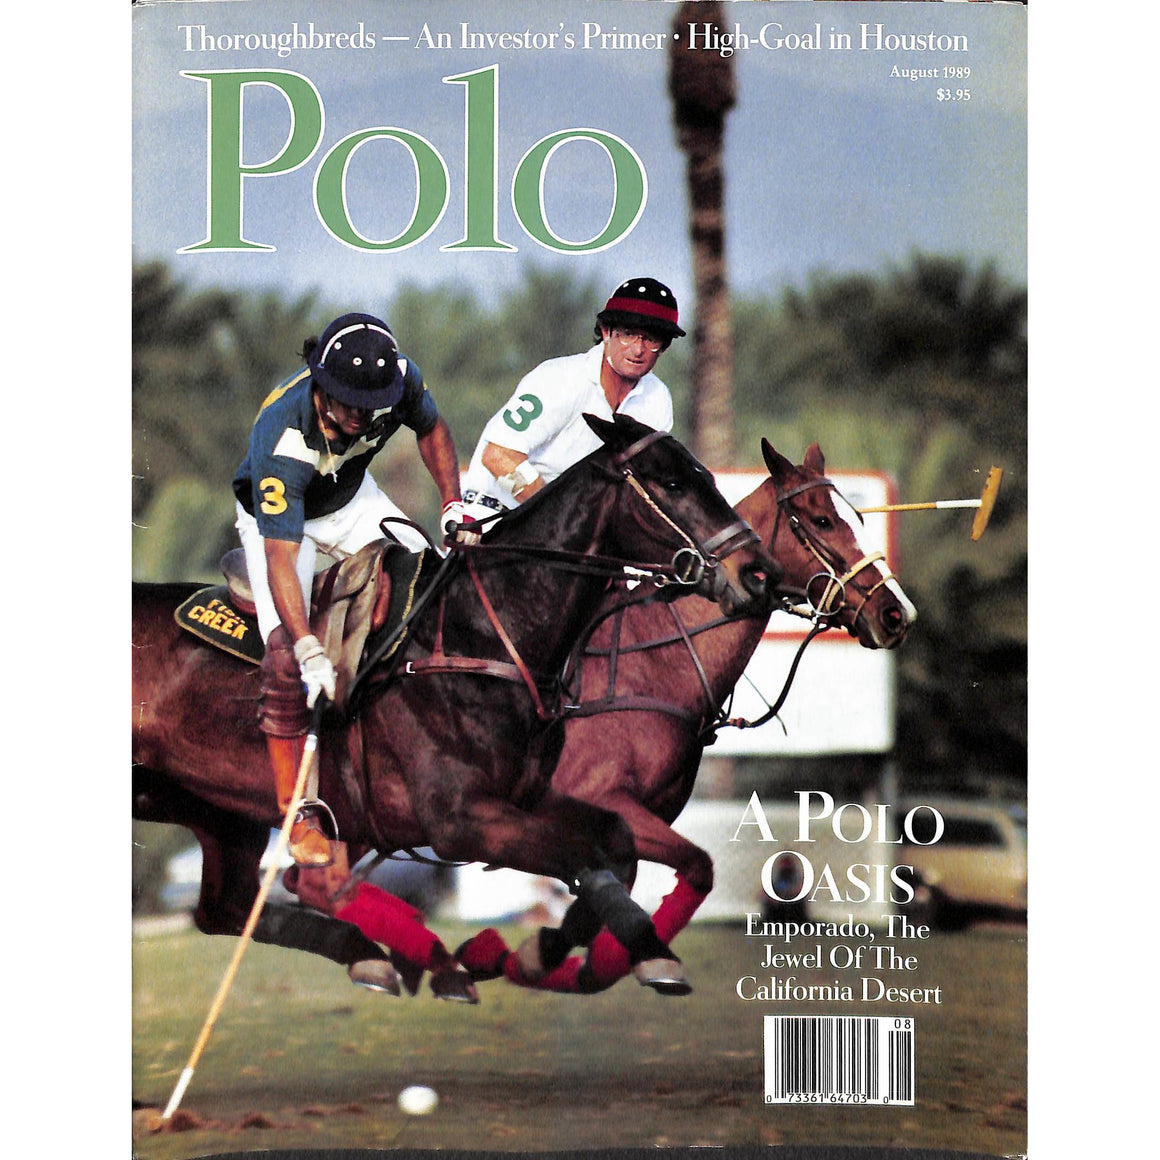 "Polo Magazine August 1989"